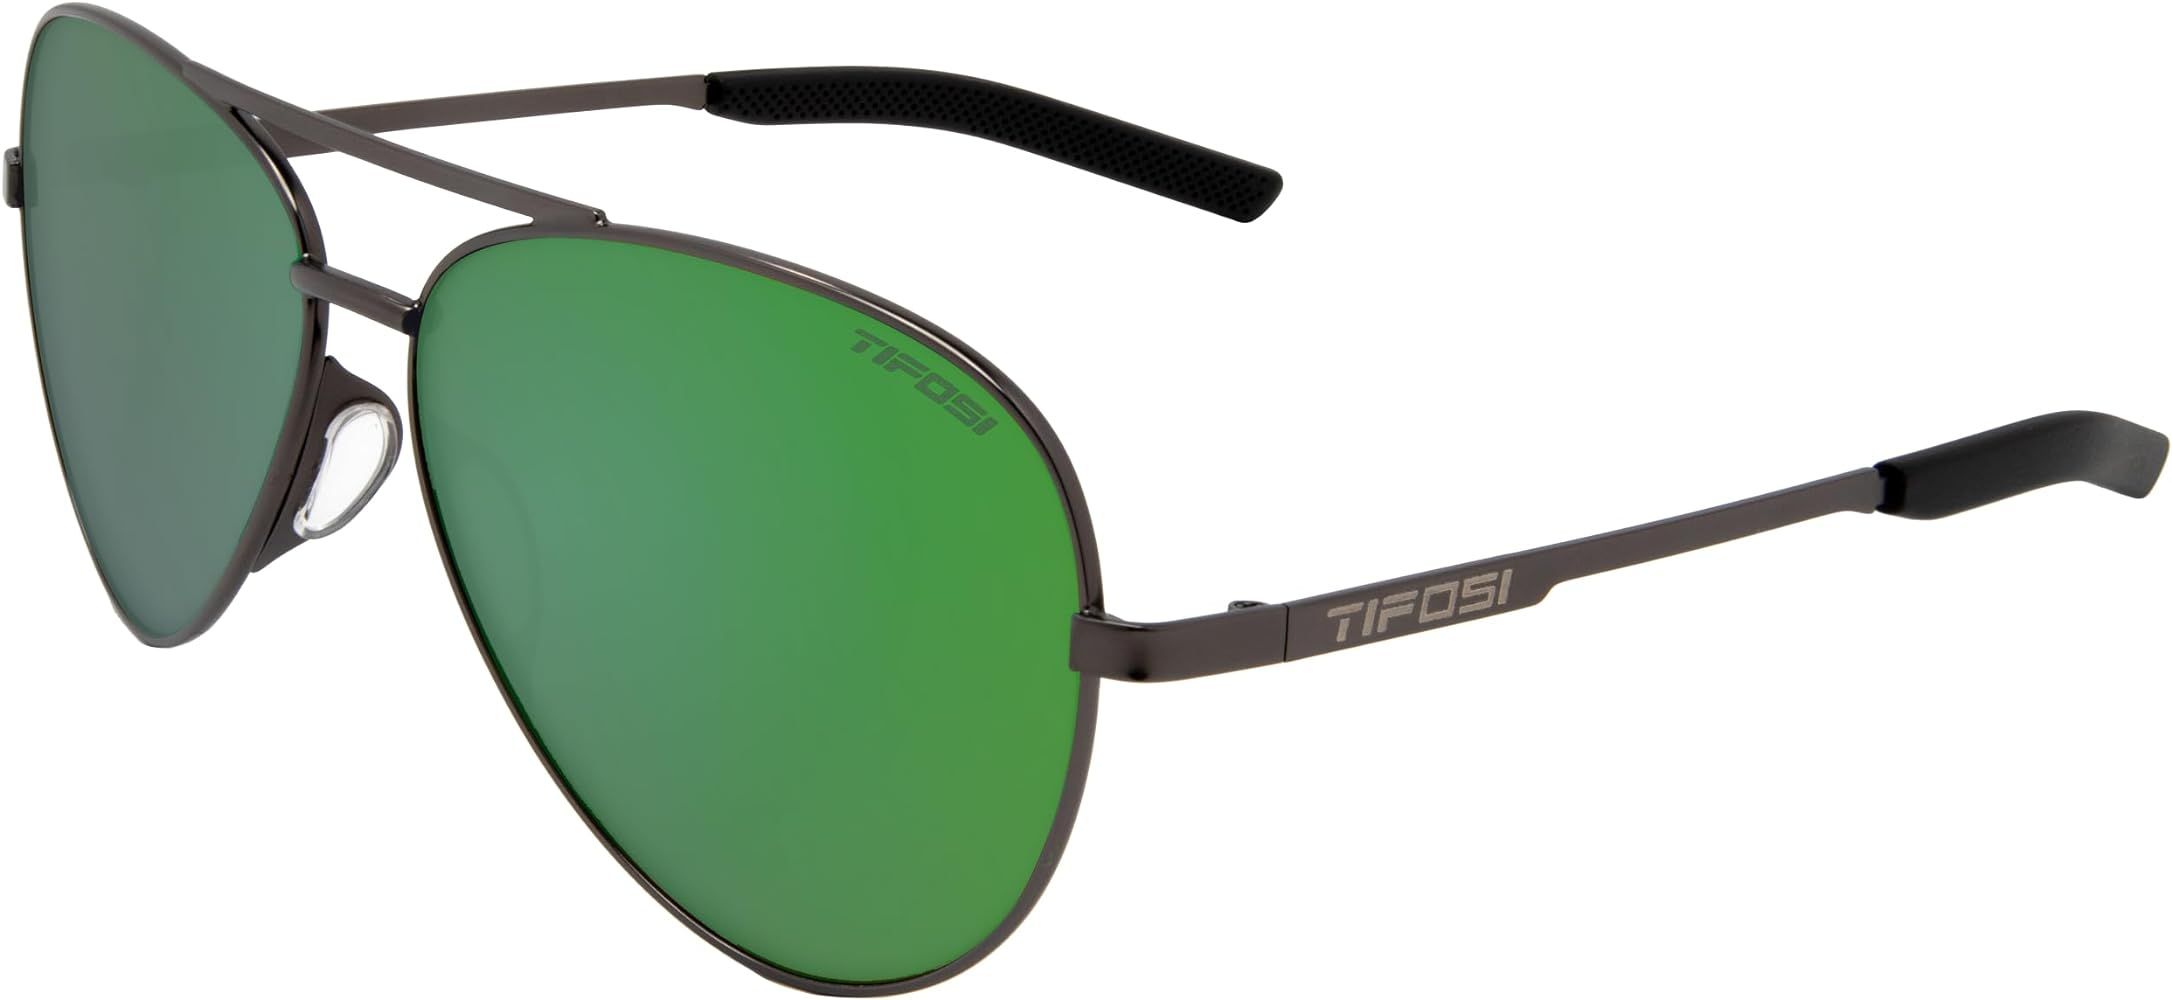 Shwae Tangle Free Aviator Sunglasses For Men & Women - Ideal For Flying, Golf, Hiking, Running an... | Amazon (US)